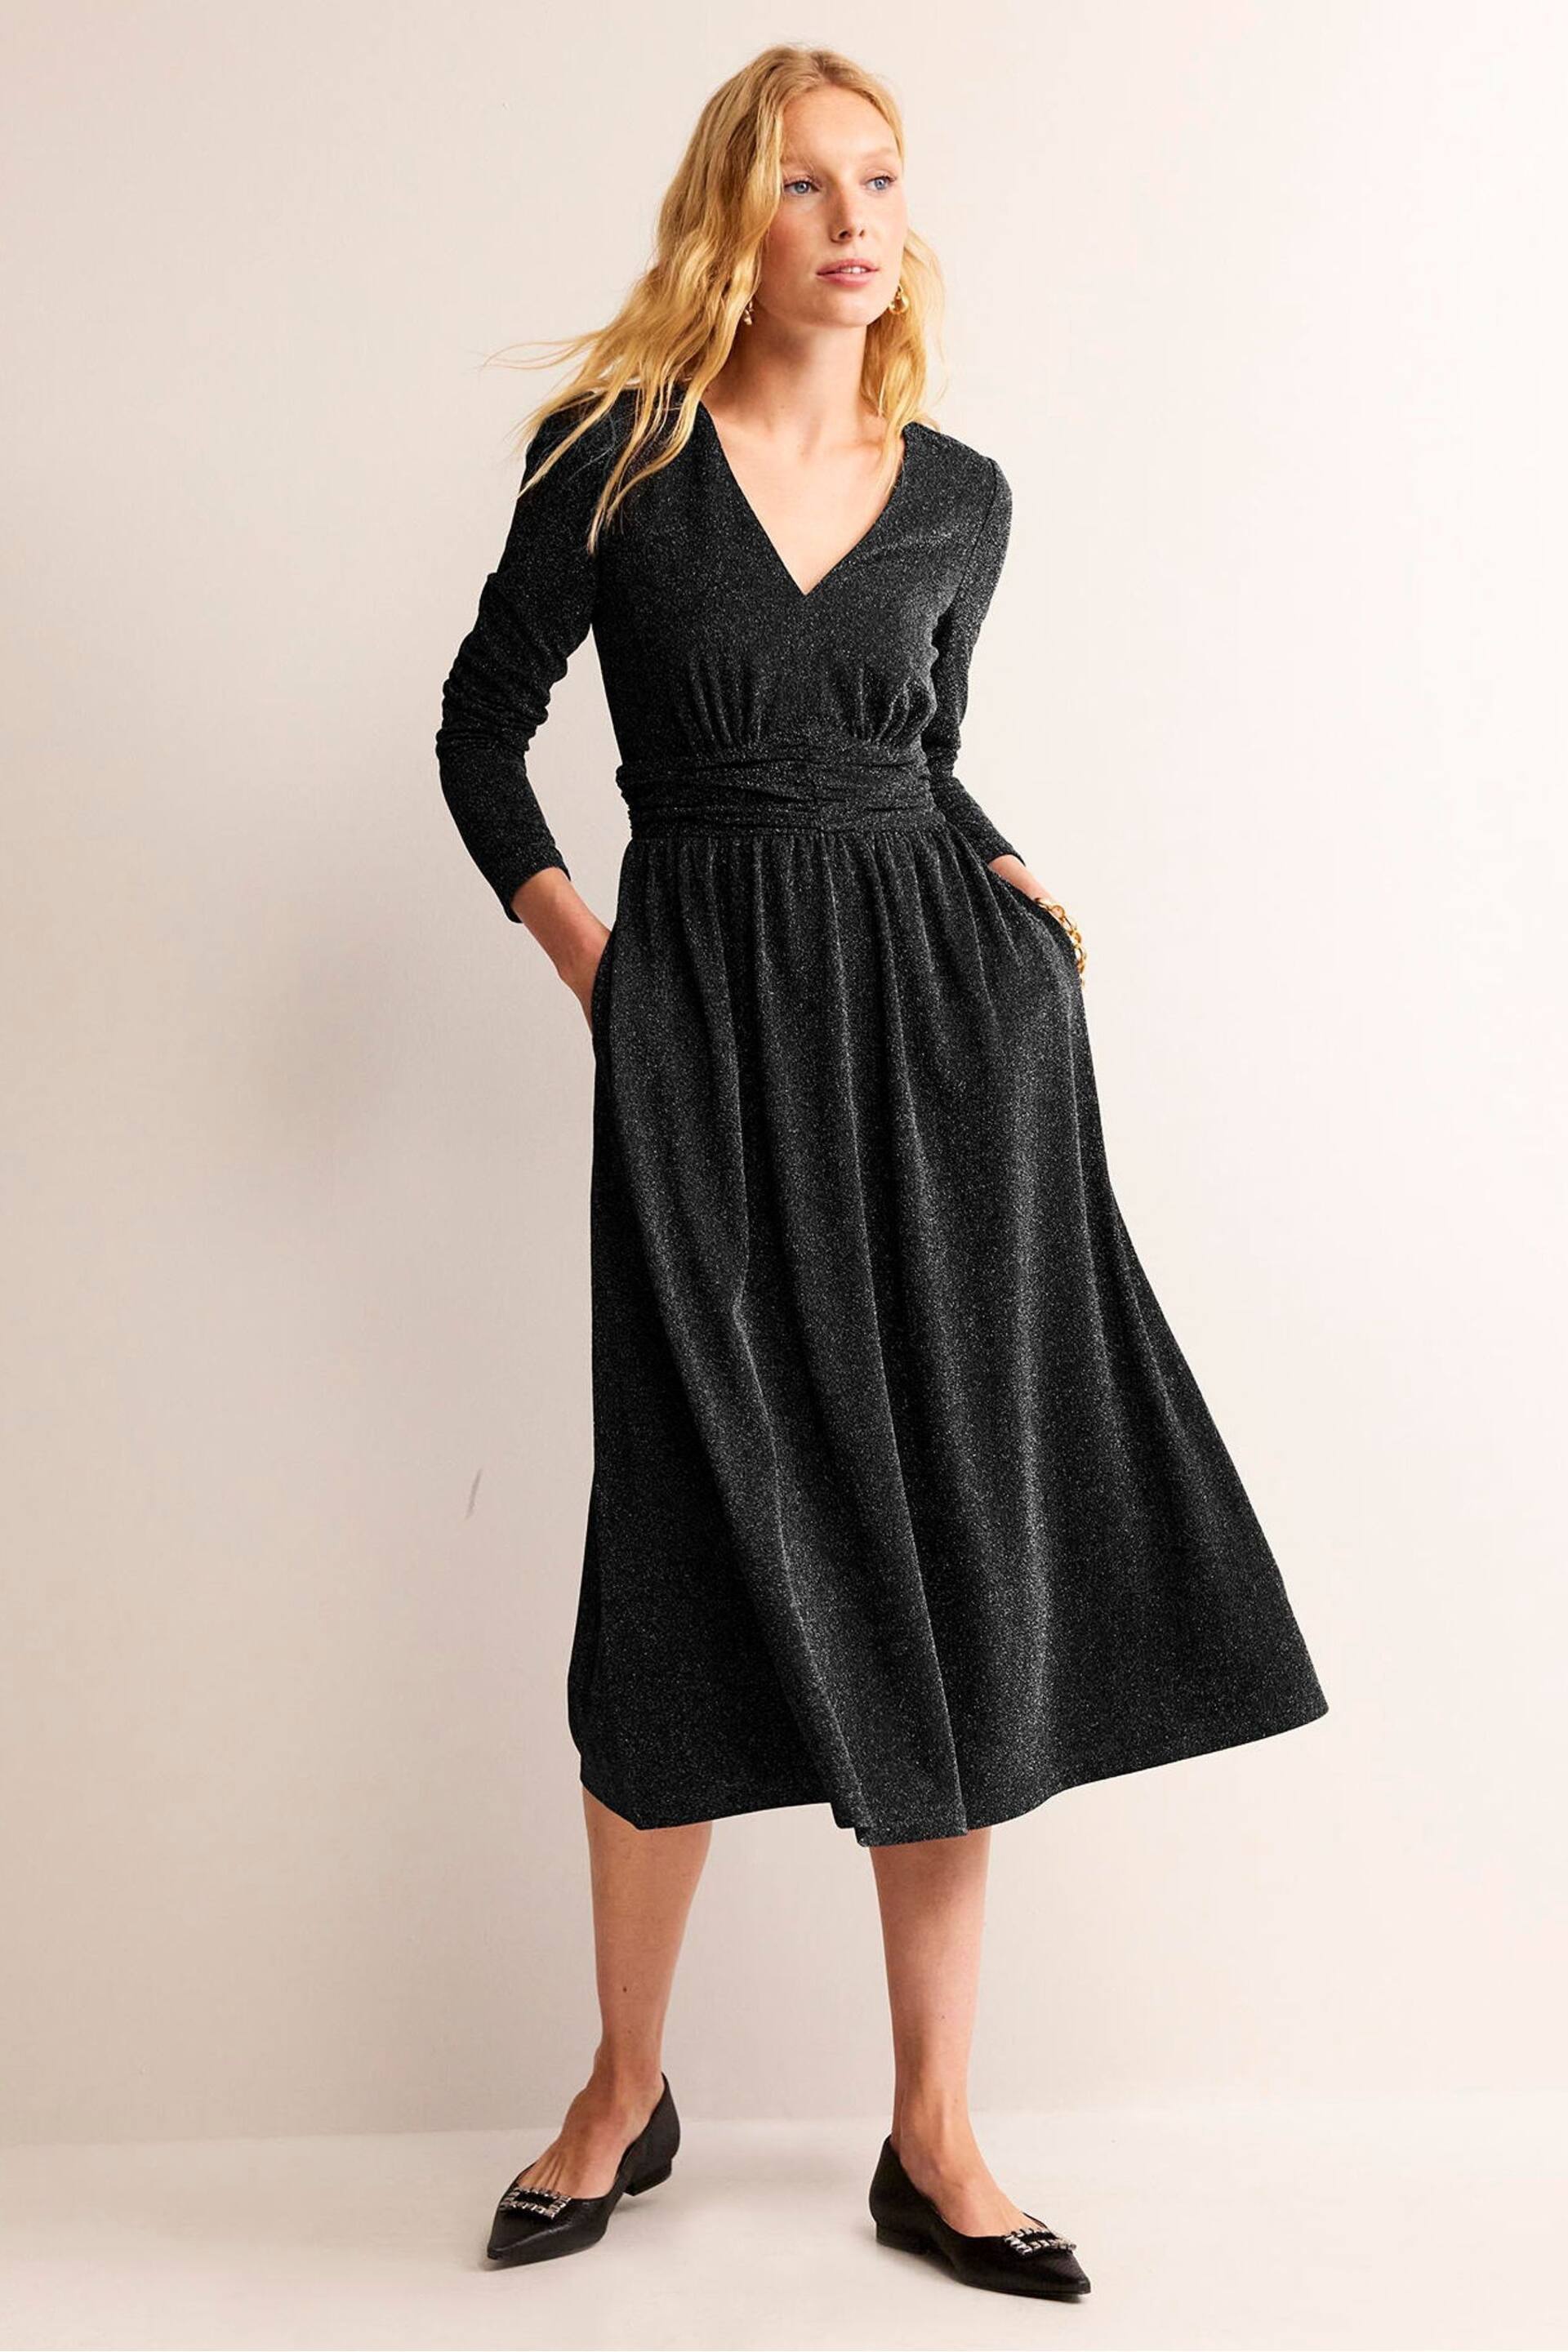 Boden Black Ruched Sparkle Midi Dress - Image 3 of 4